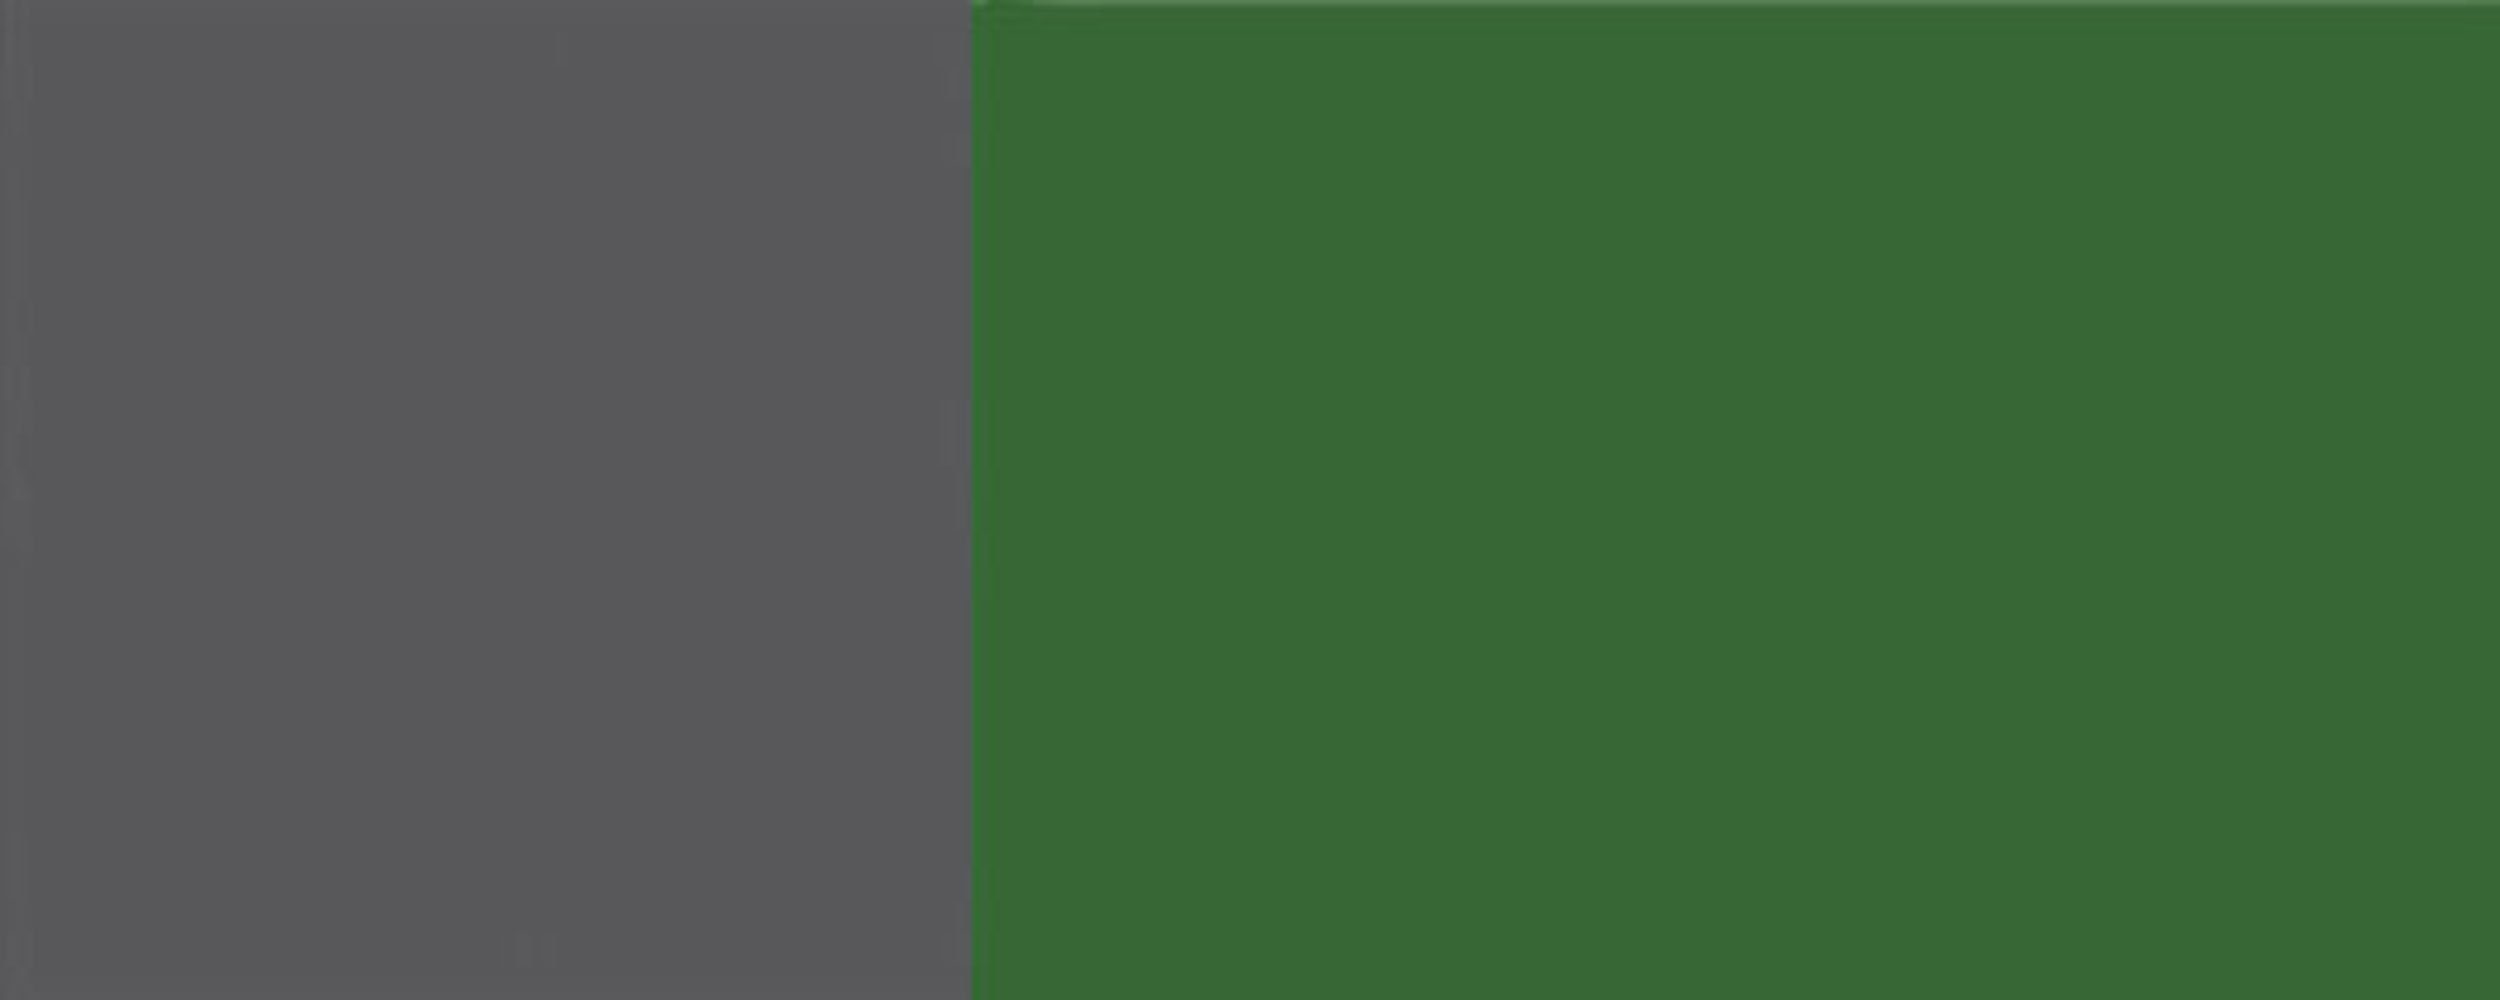 Klapphängeschrank Hochglanz und 6001 (Florence) Ausführung smaragdgrün RAL Florence Korpusfarbe 50cm Front-, 1-türig Feldmann-Wohnen wählbar grifflos